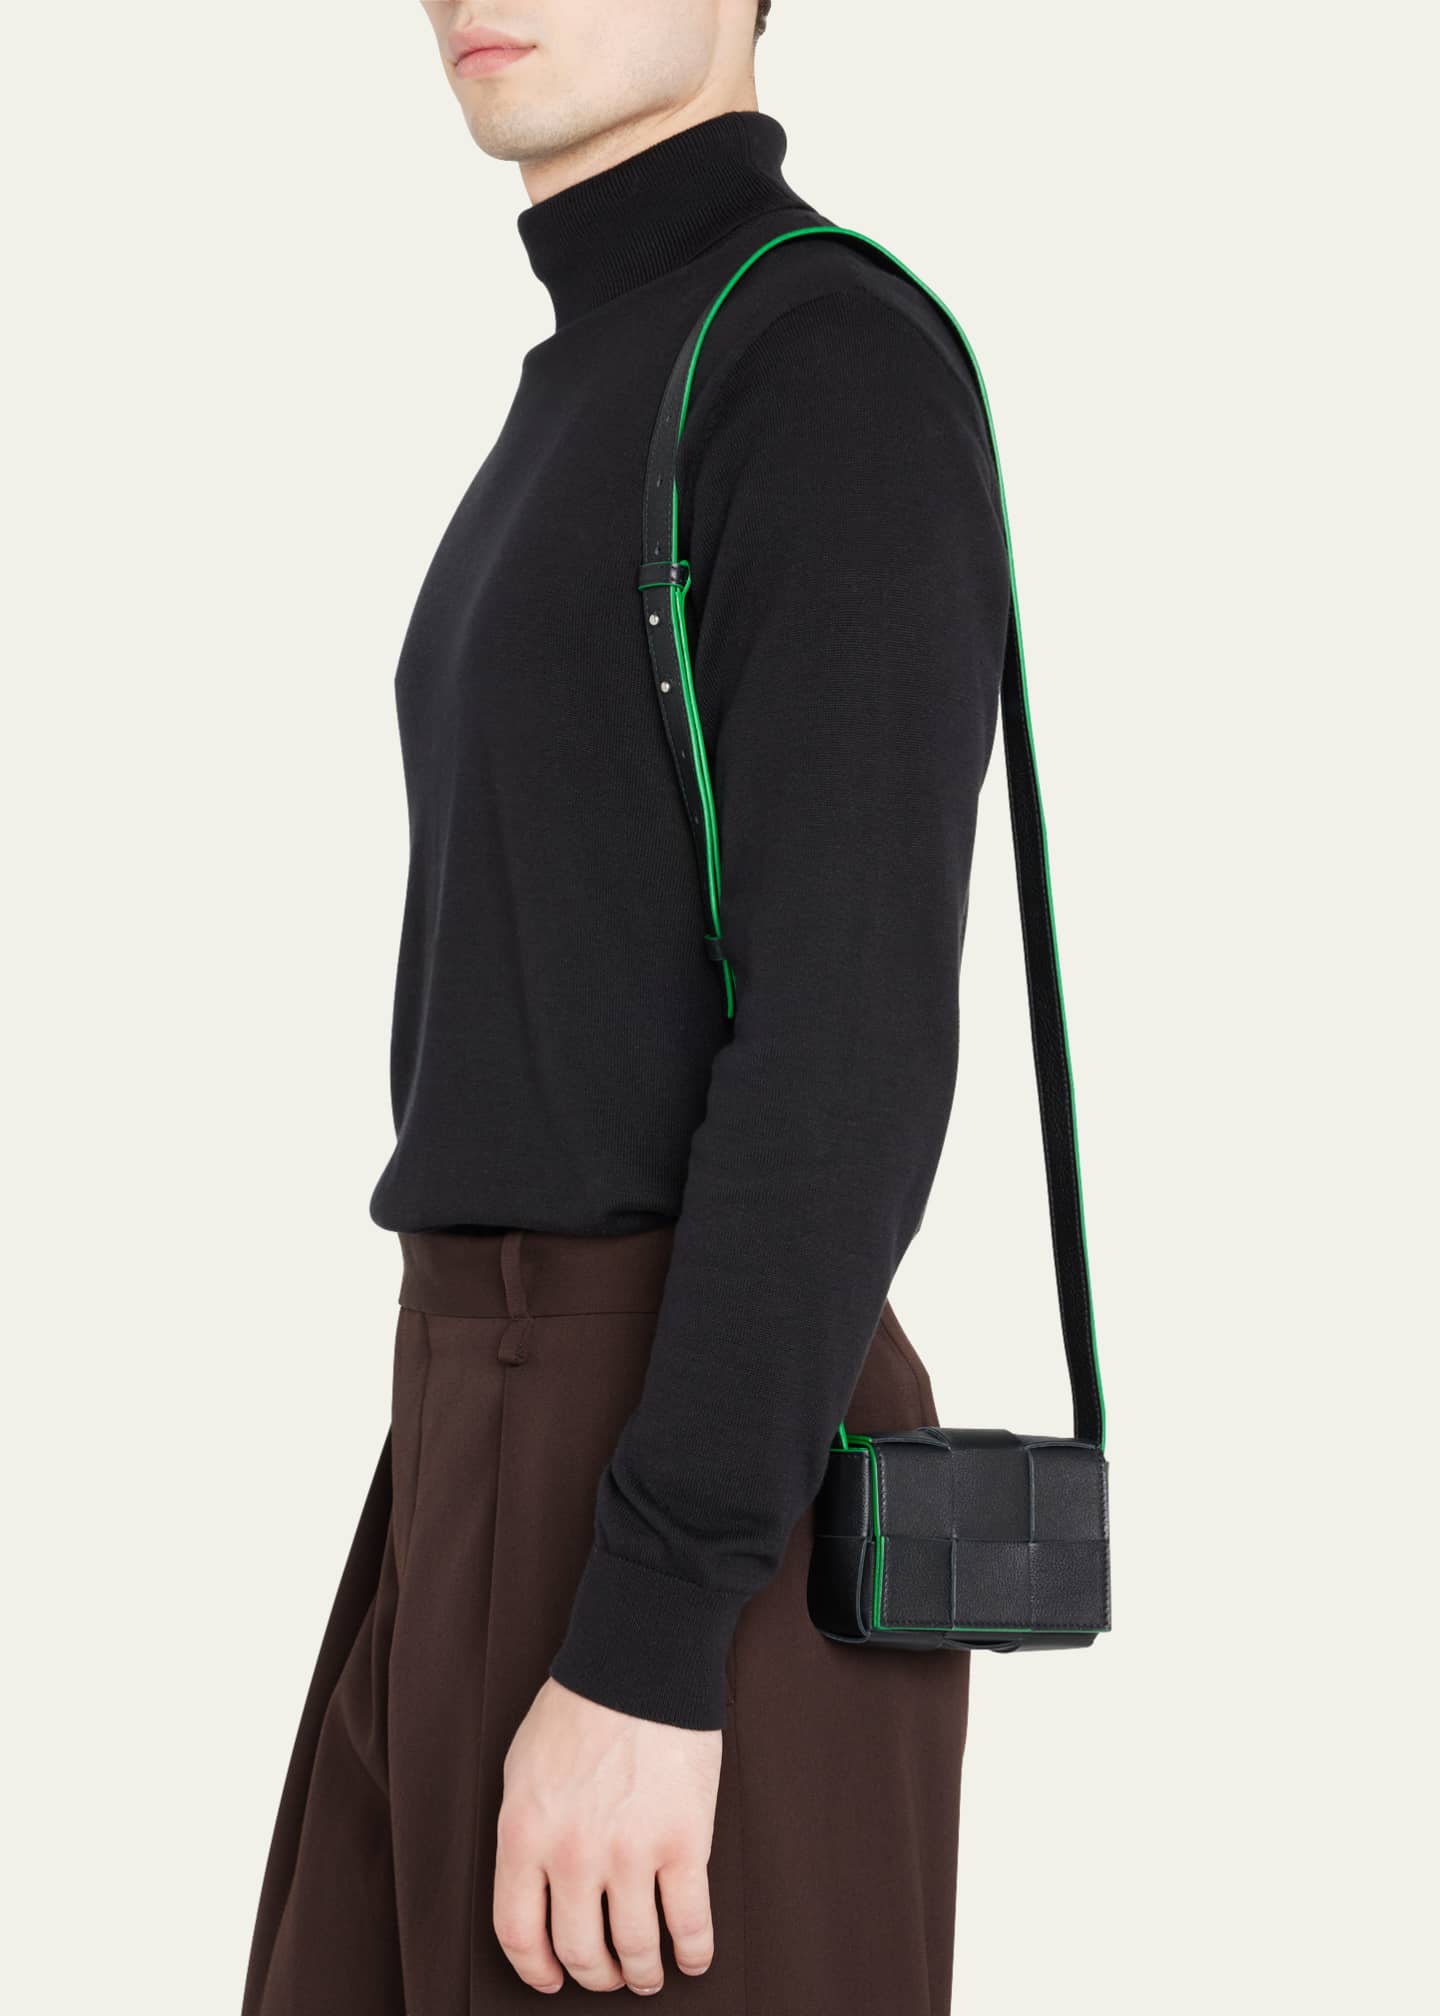 Bottega Veneta Men's Intrecciato Leather Crossbody Bag